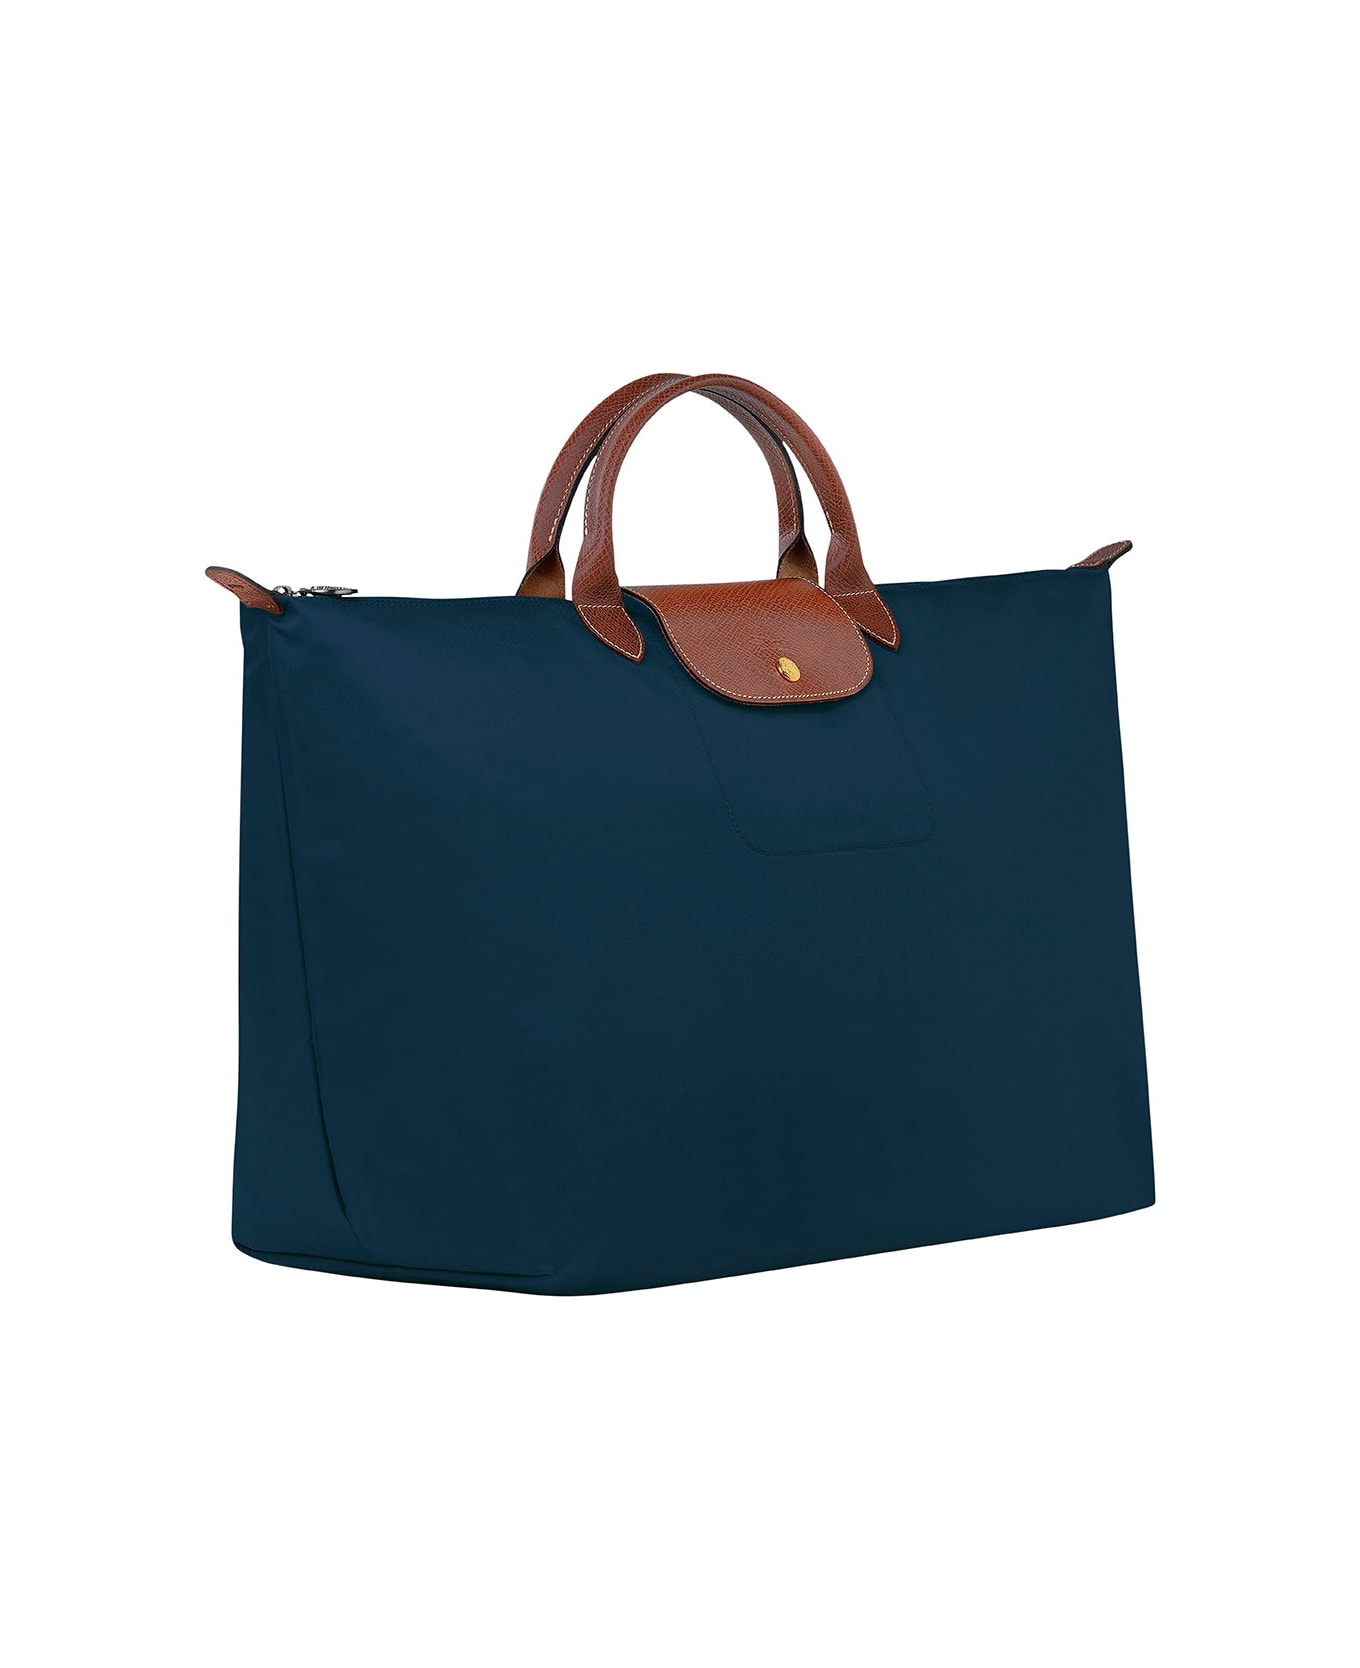 Longchamp Travel Bag S - Navy